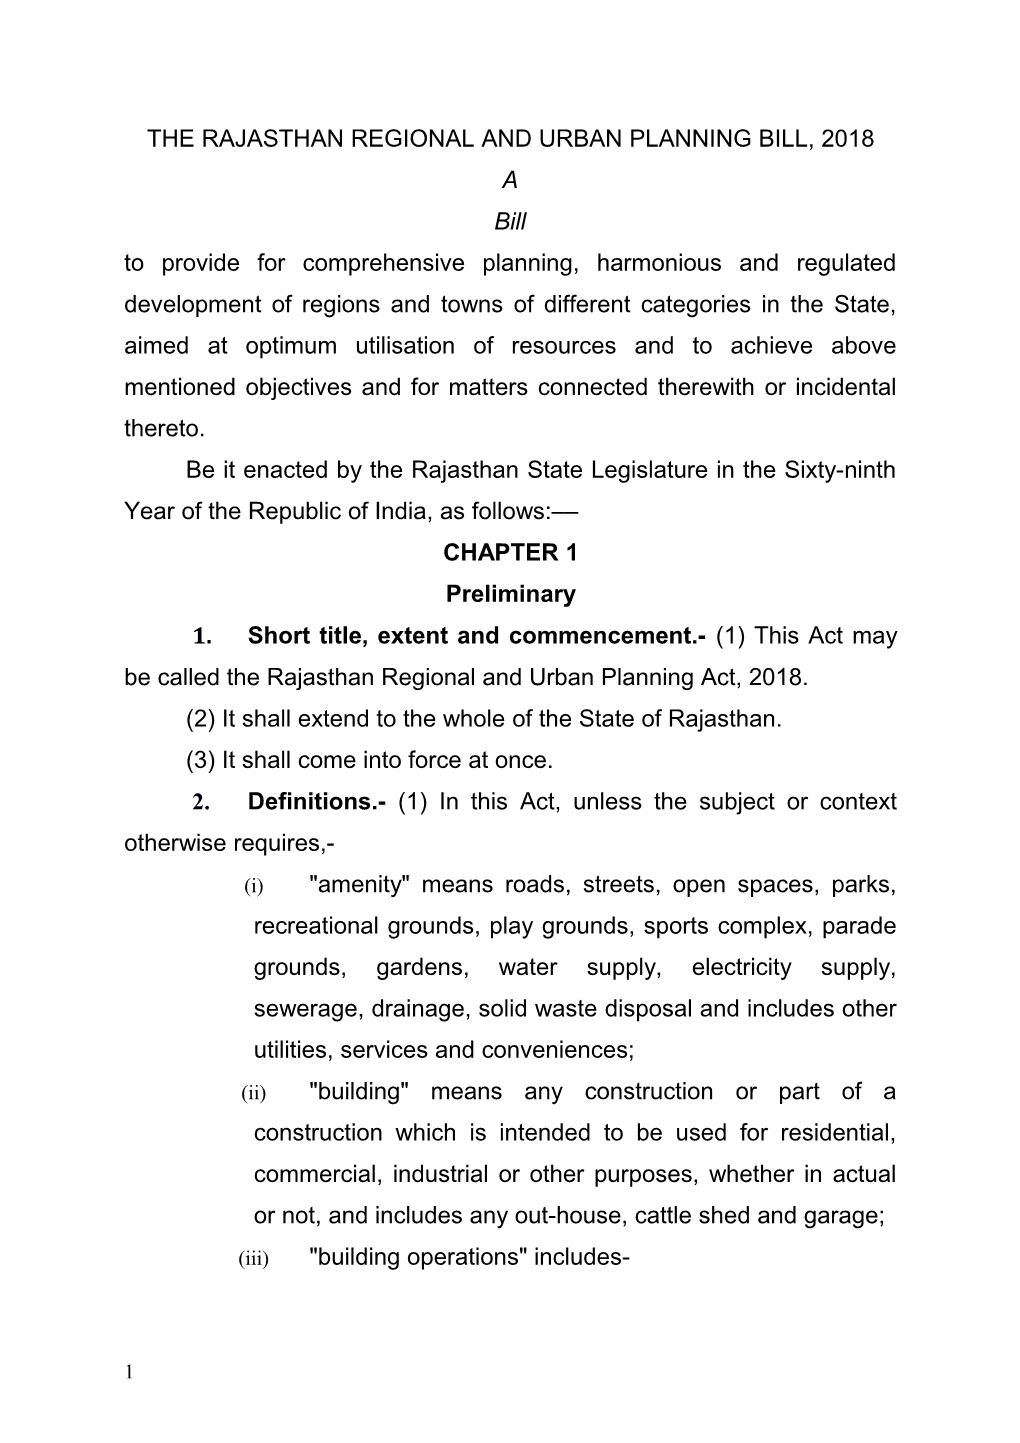 The Rajasthan Regional and Urban Planning Bill, 2018